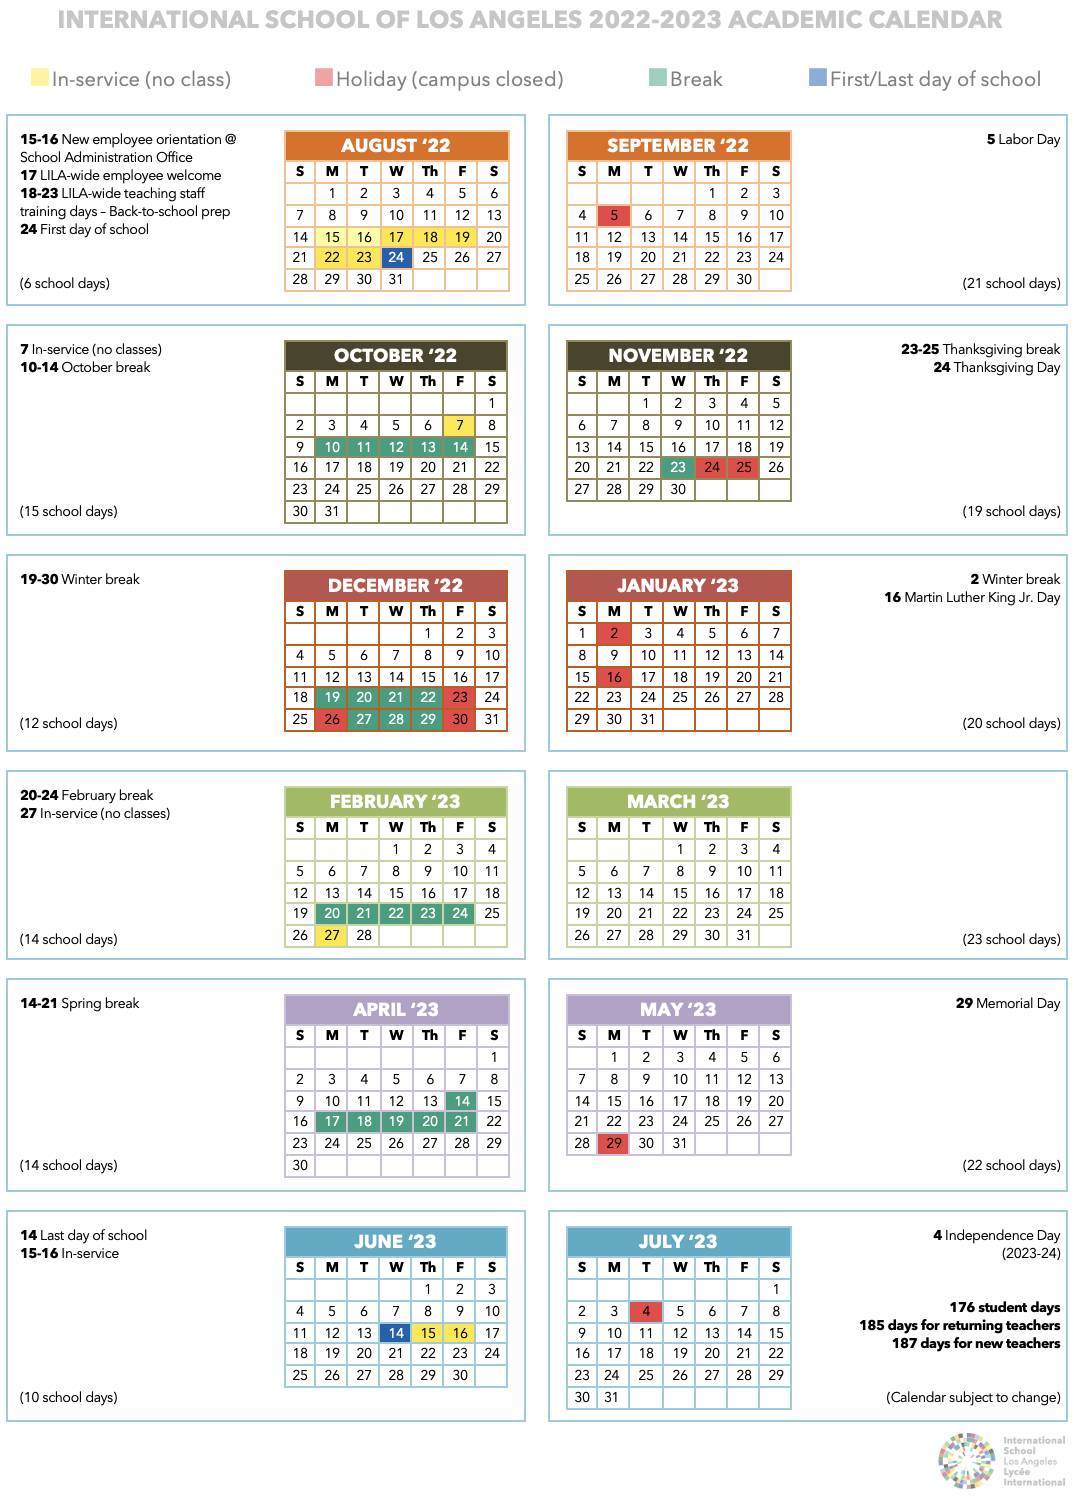 Pepperdine Academic Calendar 2022 2023 Calendar | International School Of Los Angeles